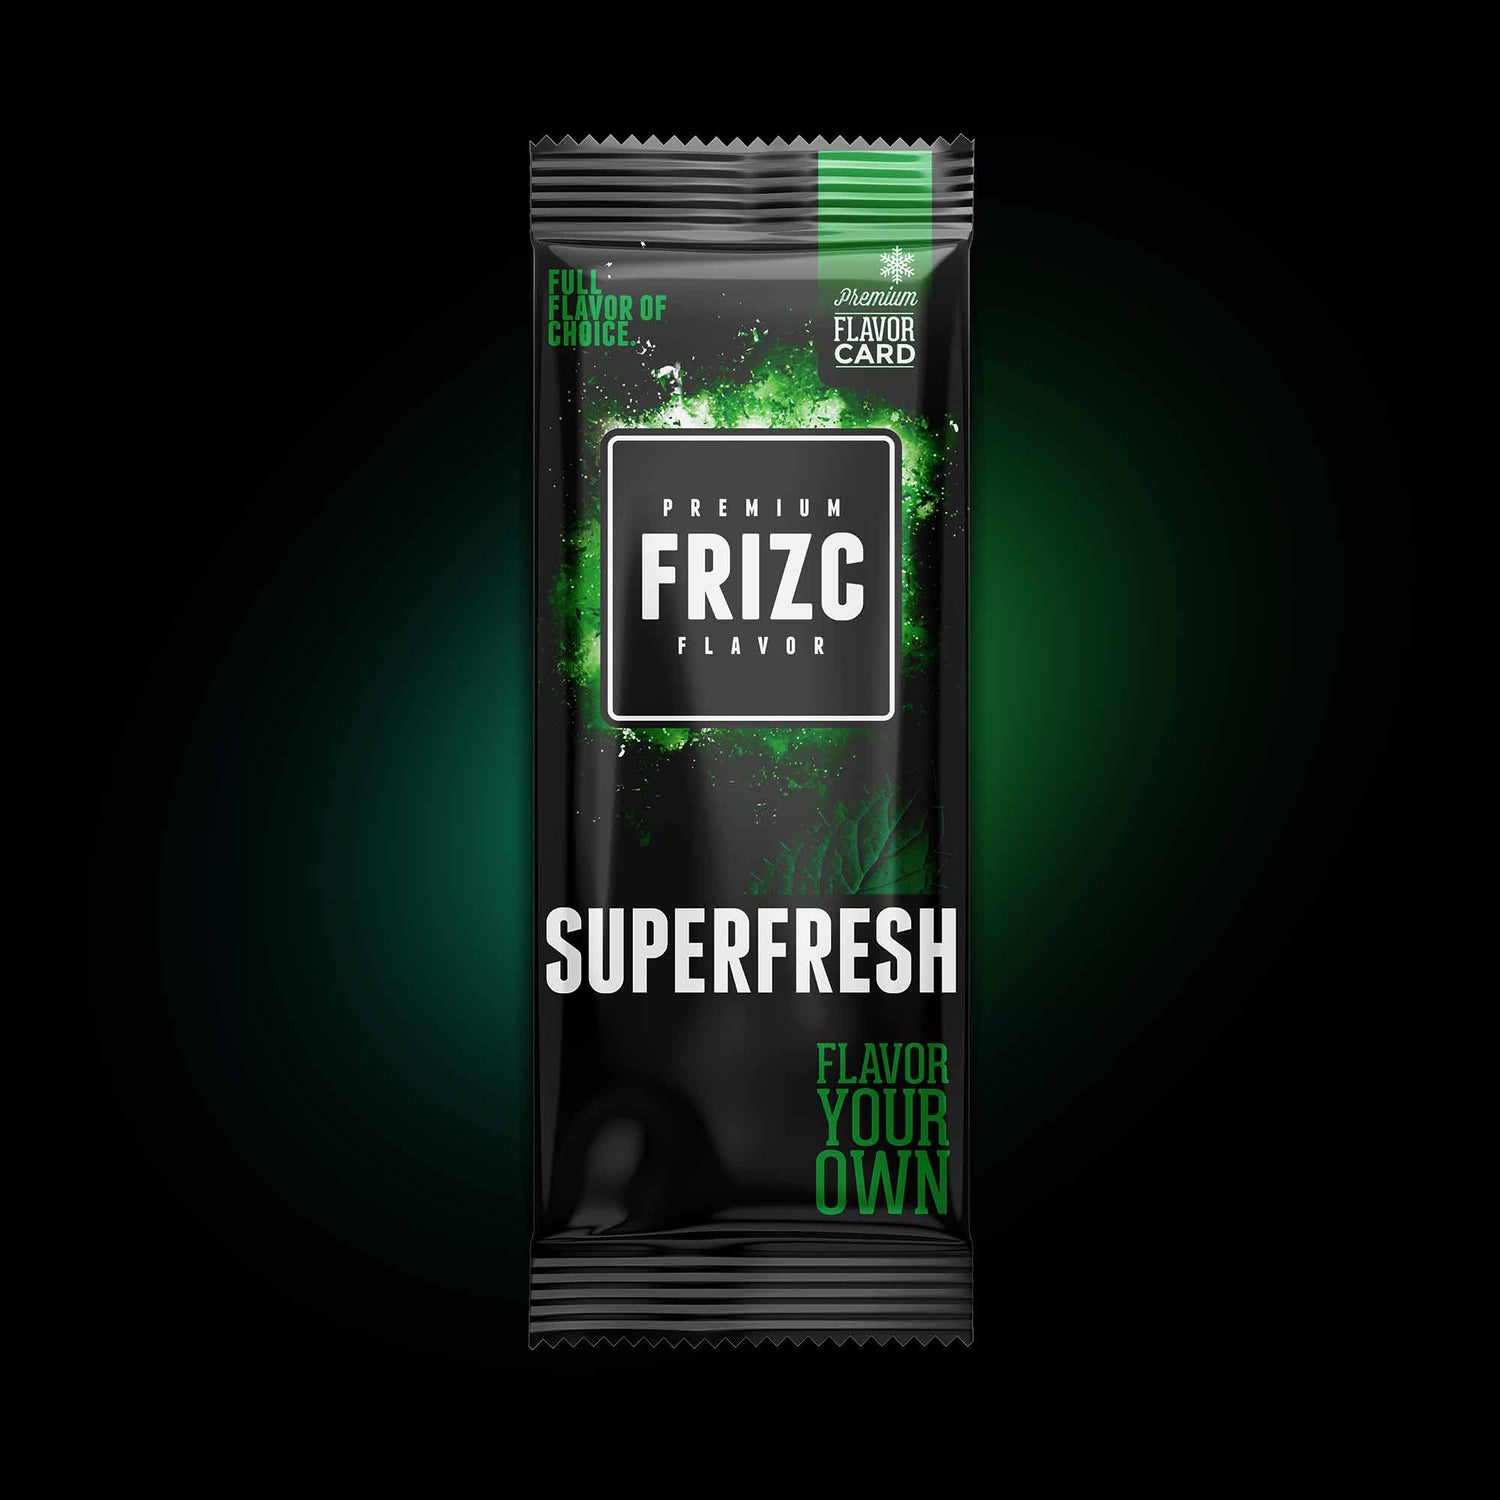 FRIZC Superfresh